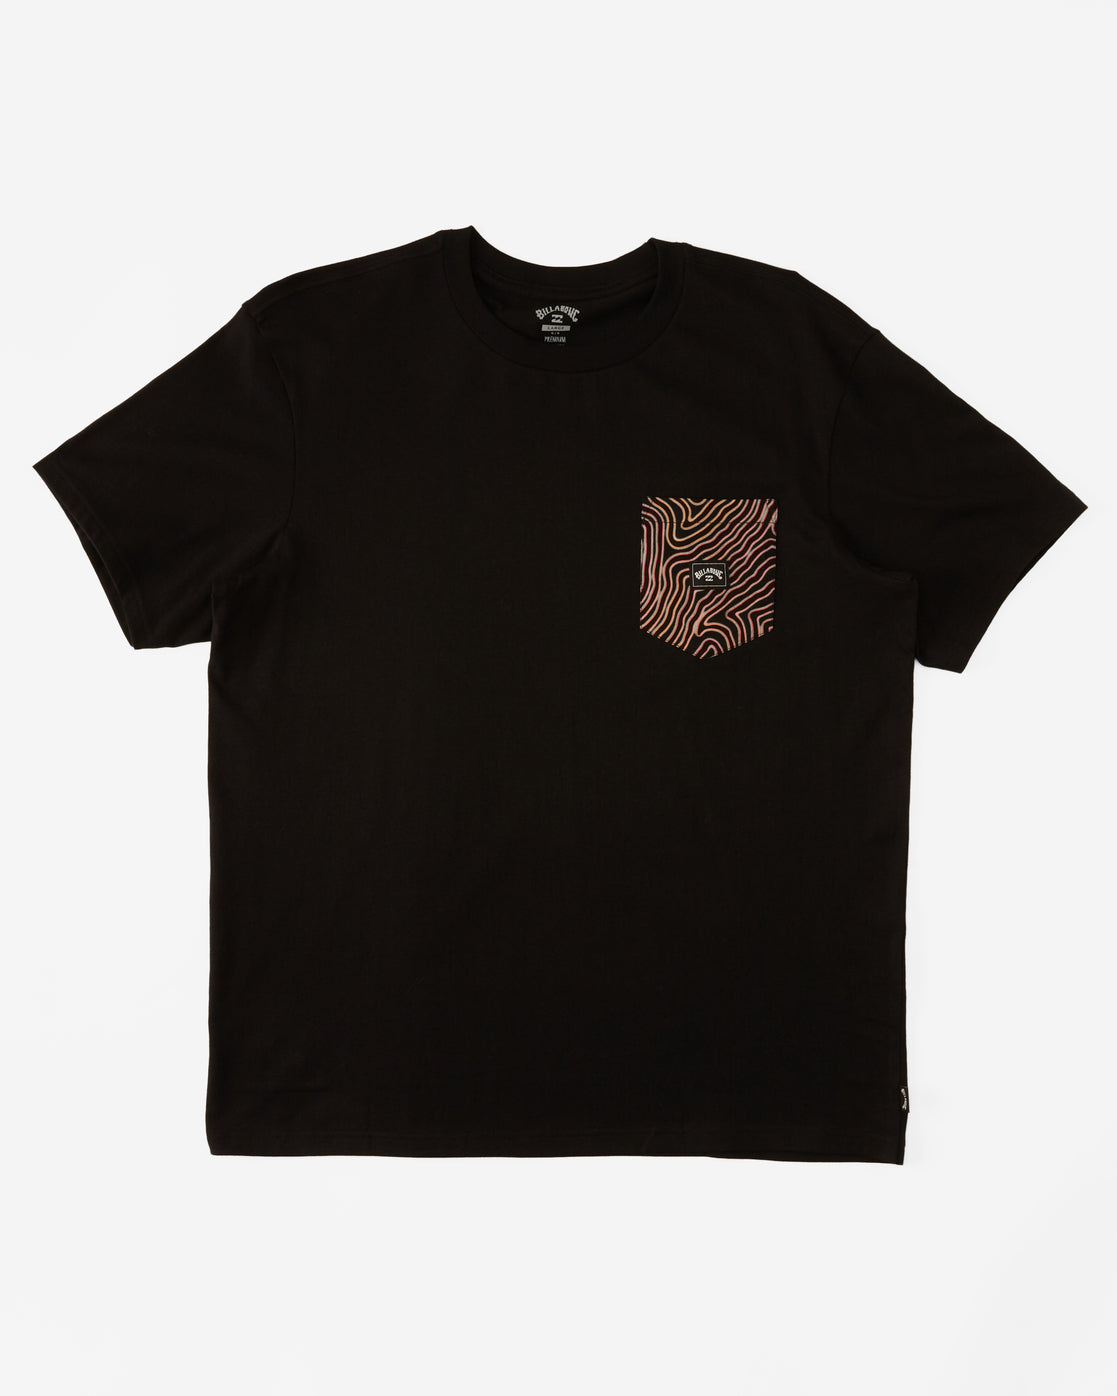 Team Pocket T-Shirt - Black